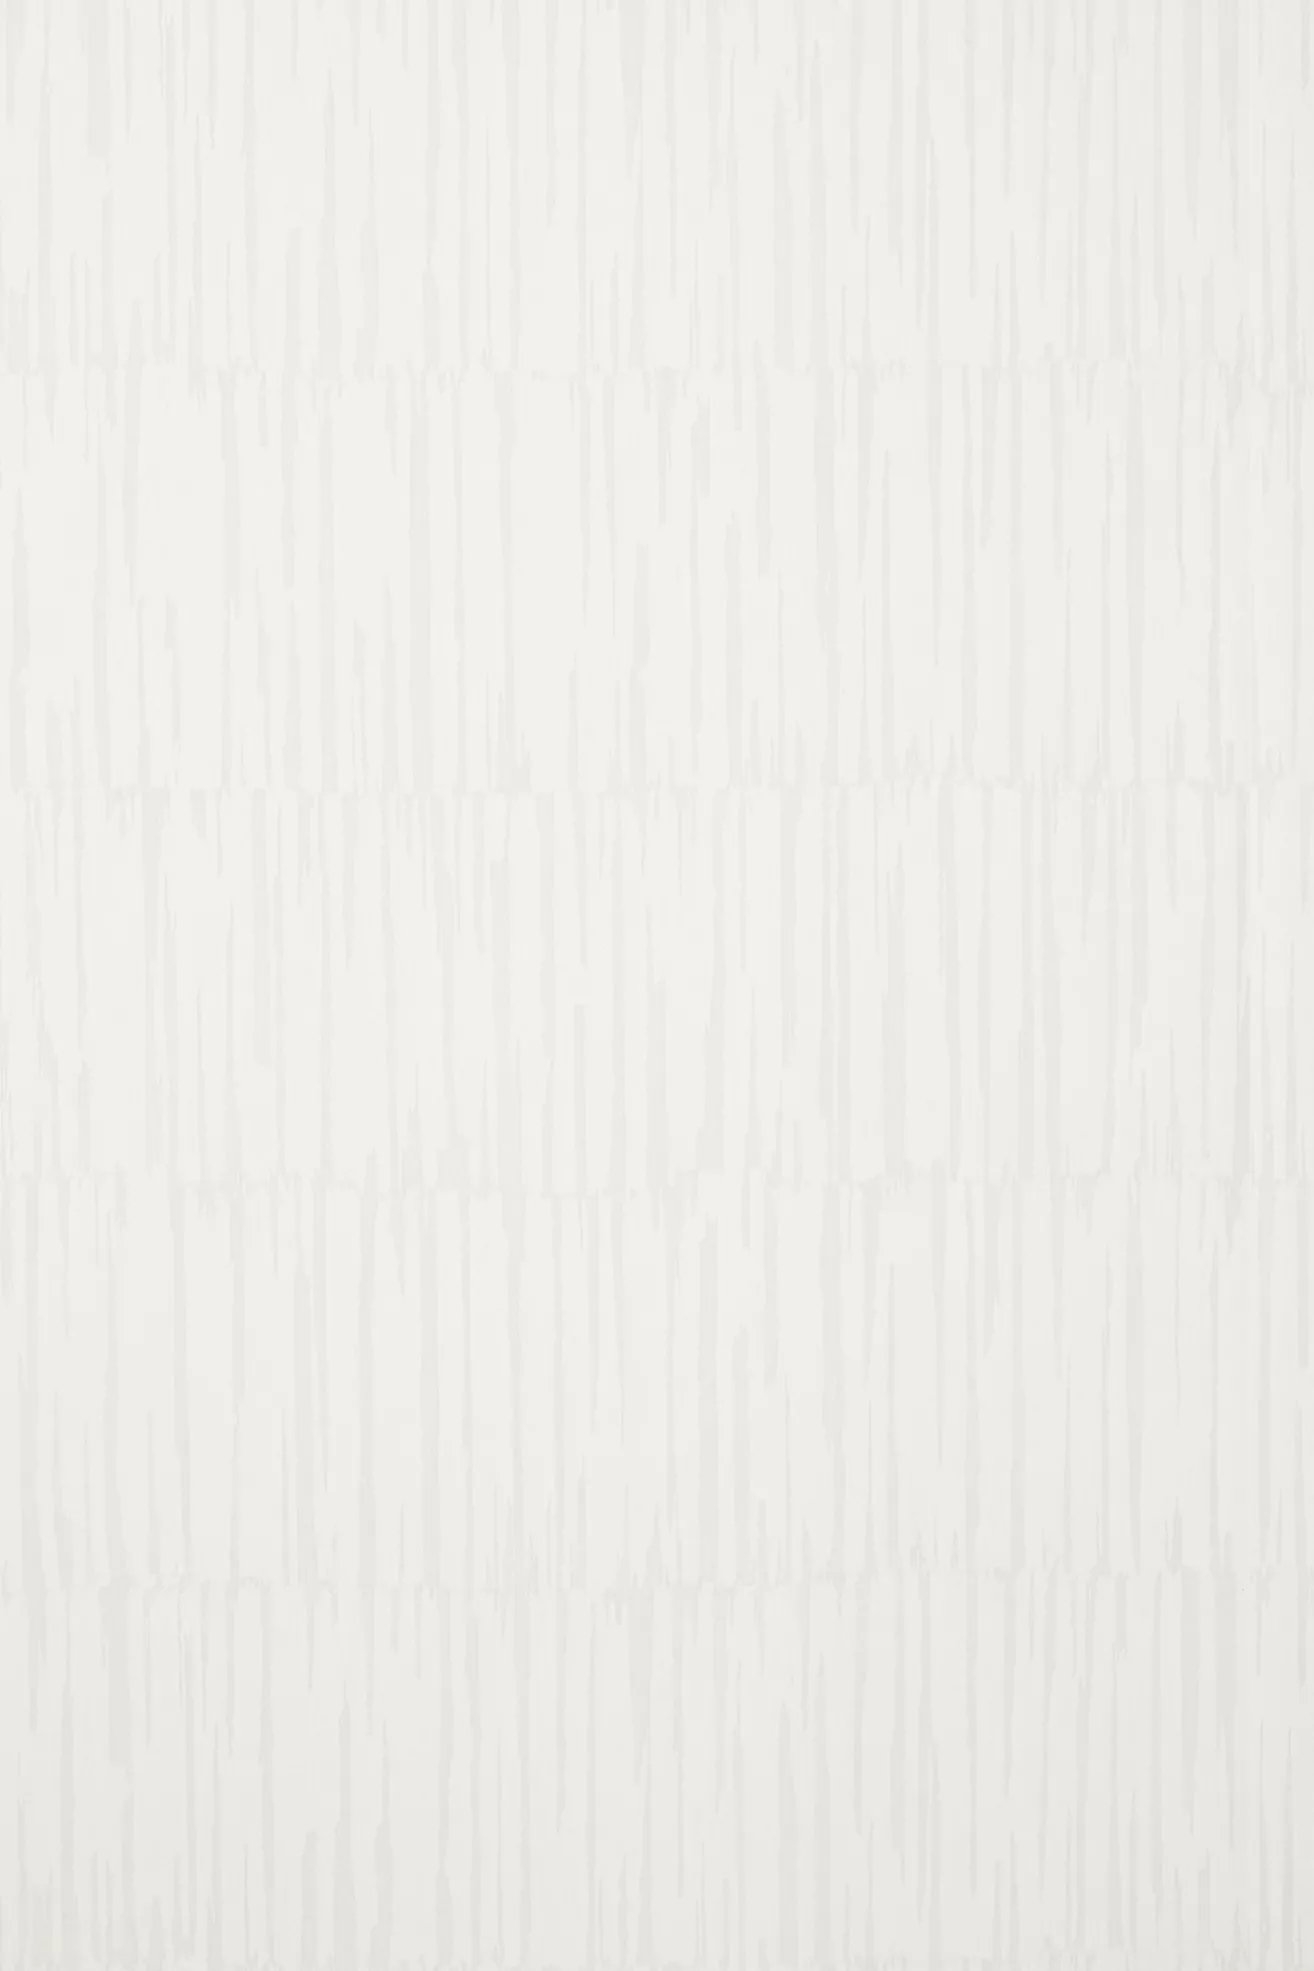 Zandari Textured Wallpaper By Anthropologie in White - Image 0